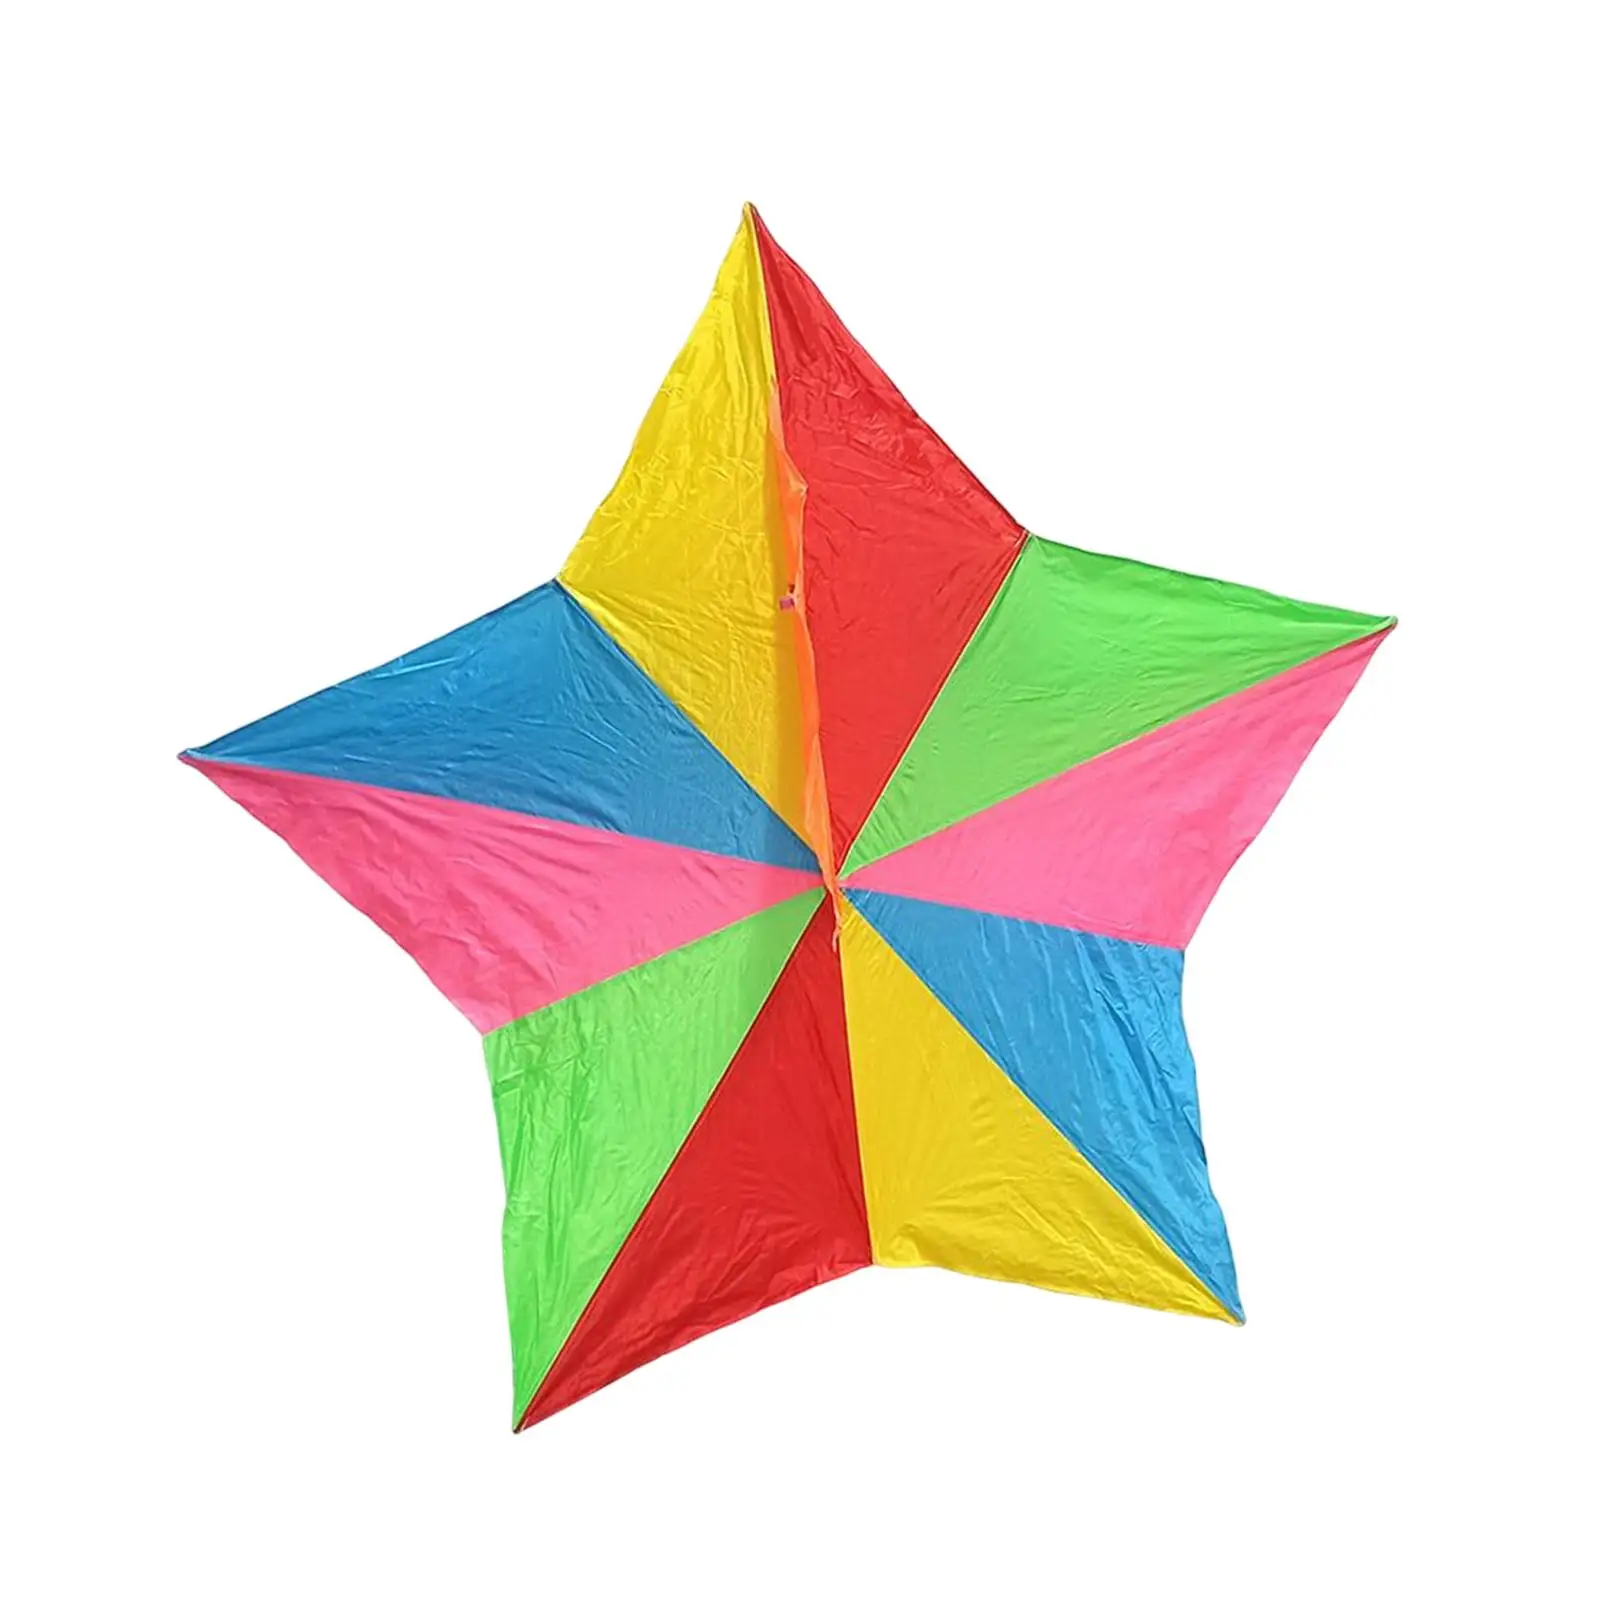 Portable Five Pointed Star Kite Durable Cute Line Kite for Lawn Garden Beginner